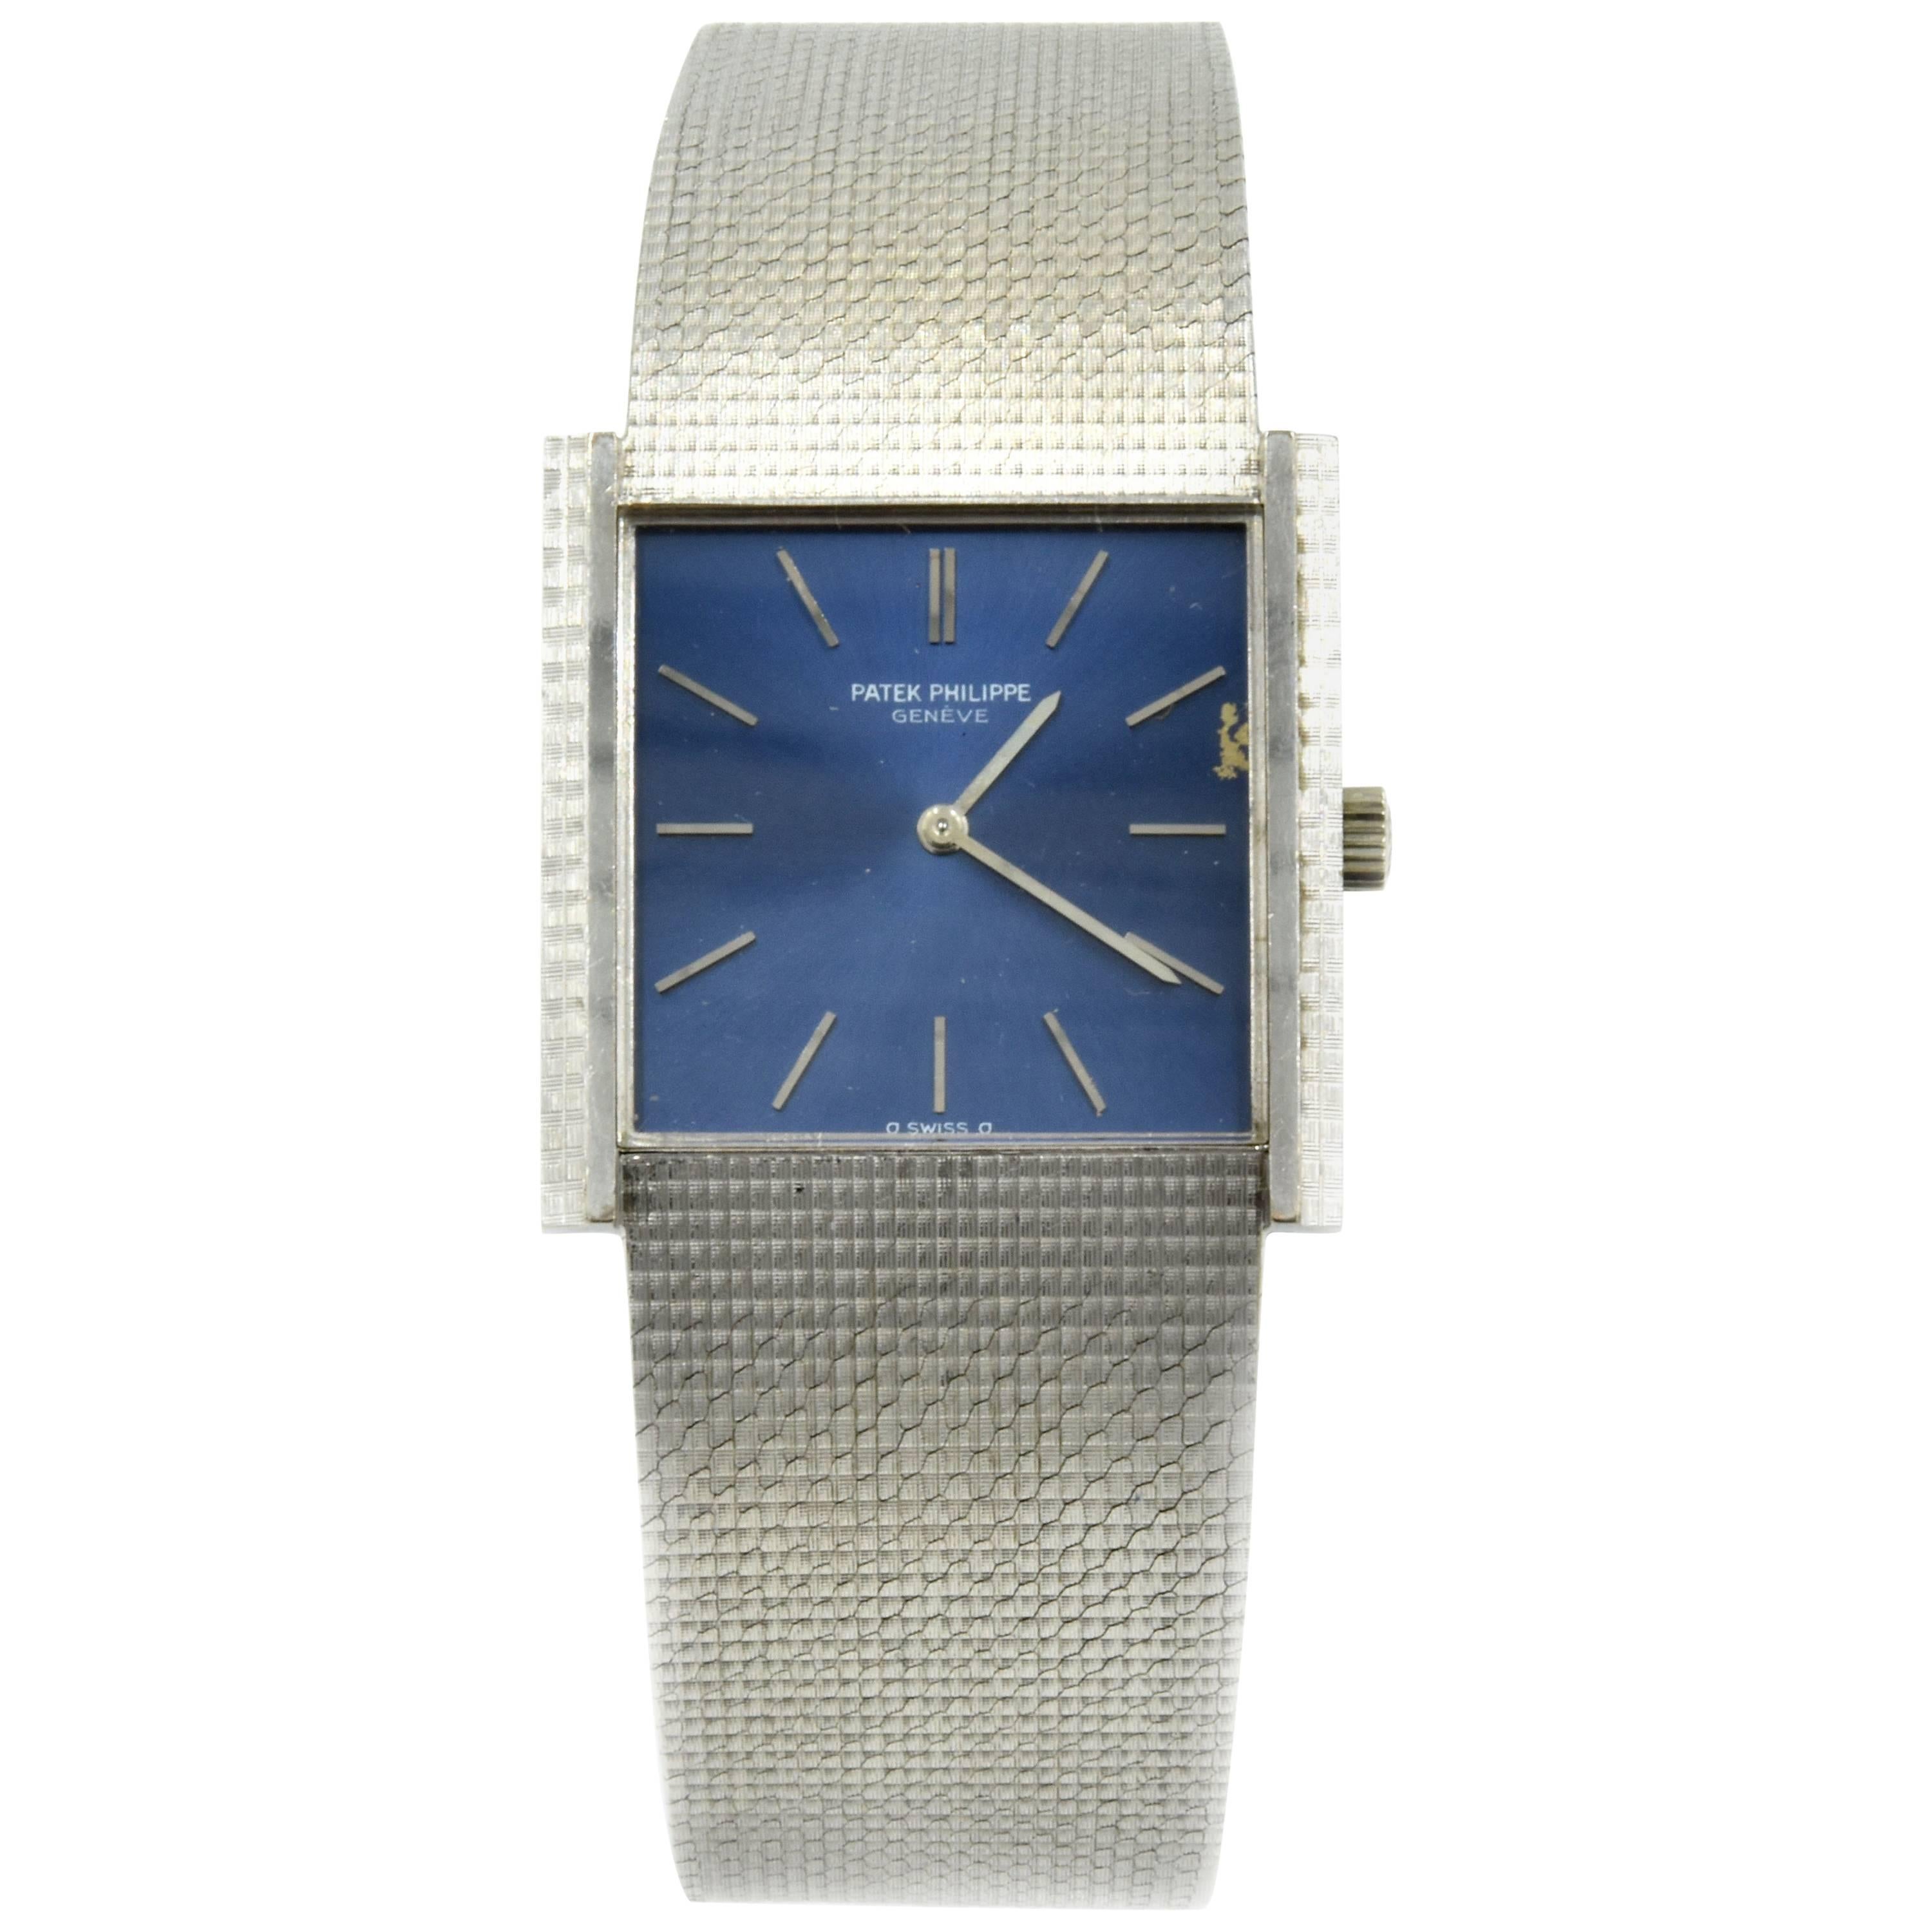 Patek Philippe White Gold Mechanical Dress Wristwatch, circa 1971, Ref 3570-1